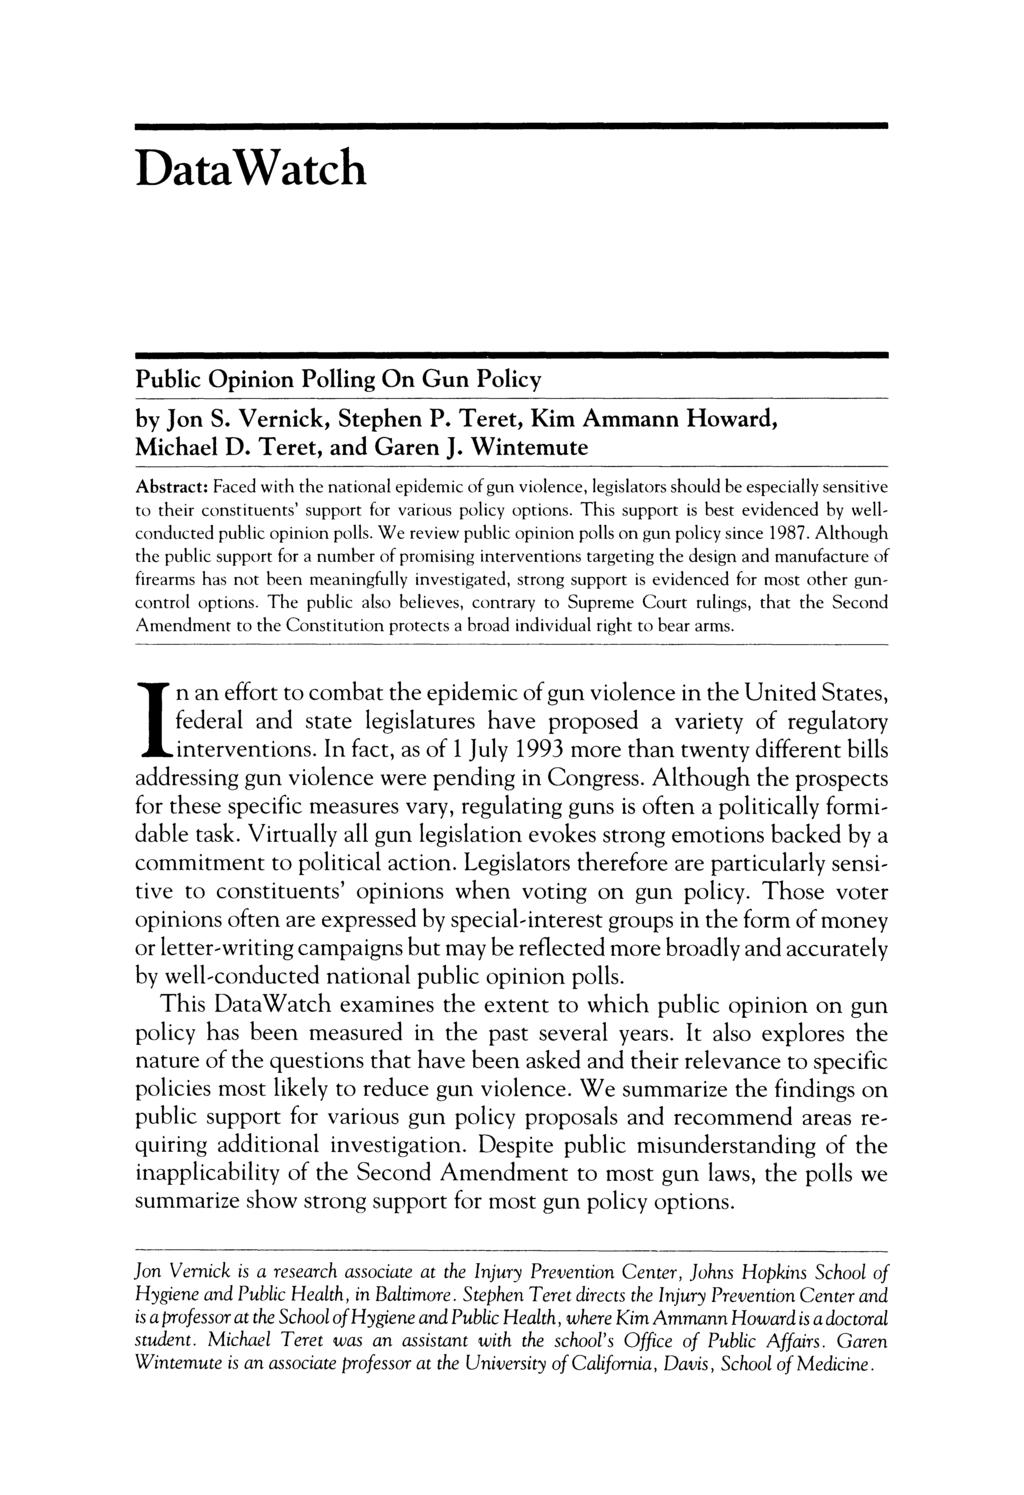 DataWatch Public Opinion Polling On Gun Policy by Jon S. Vernick, Stephen P. Teret, Kim Ammann Howard, Michael D. Teret, and Garen J.